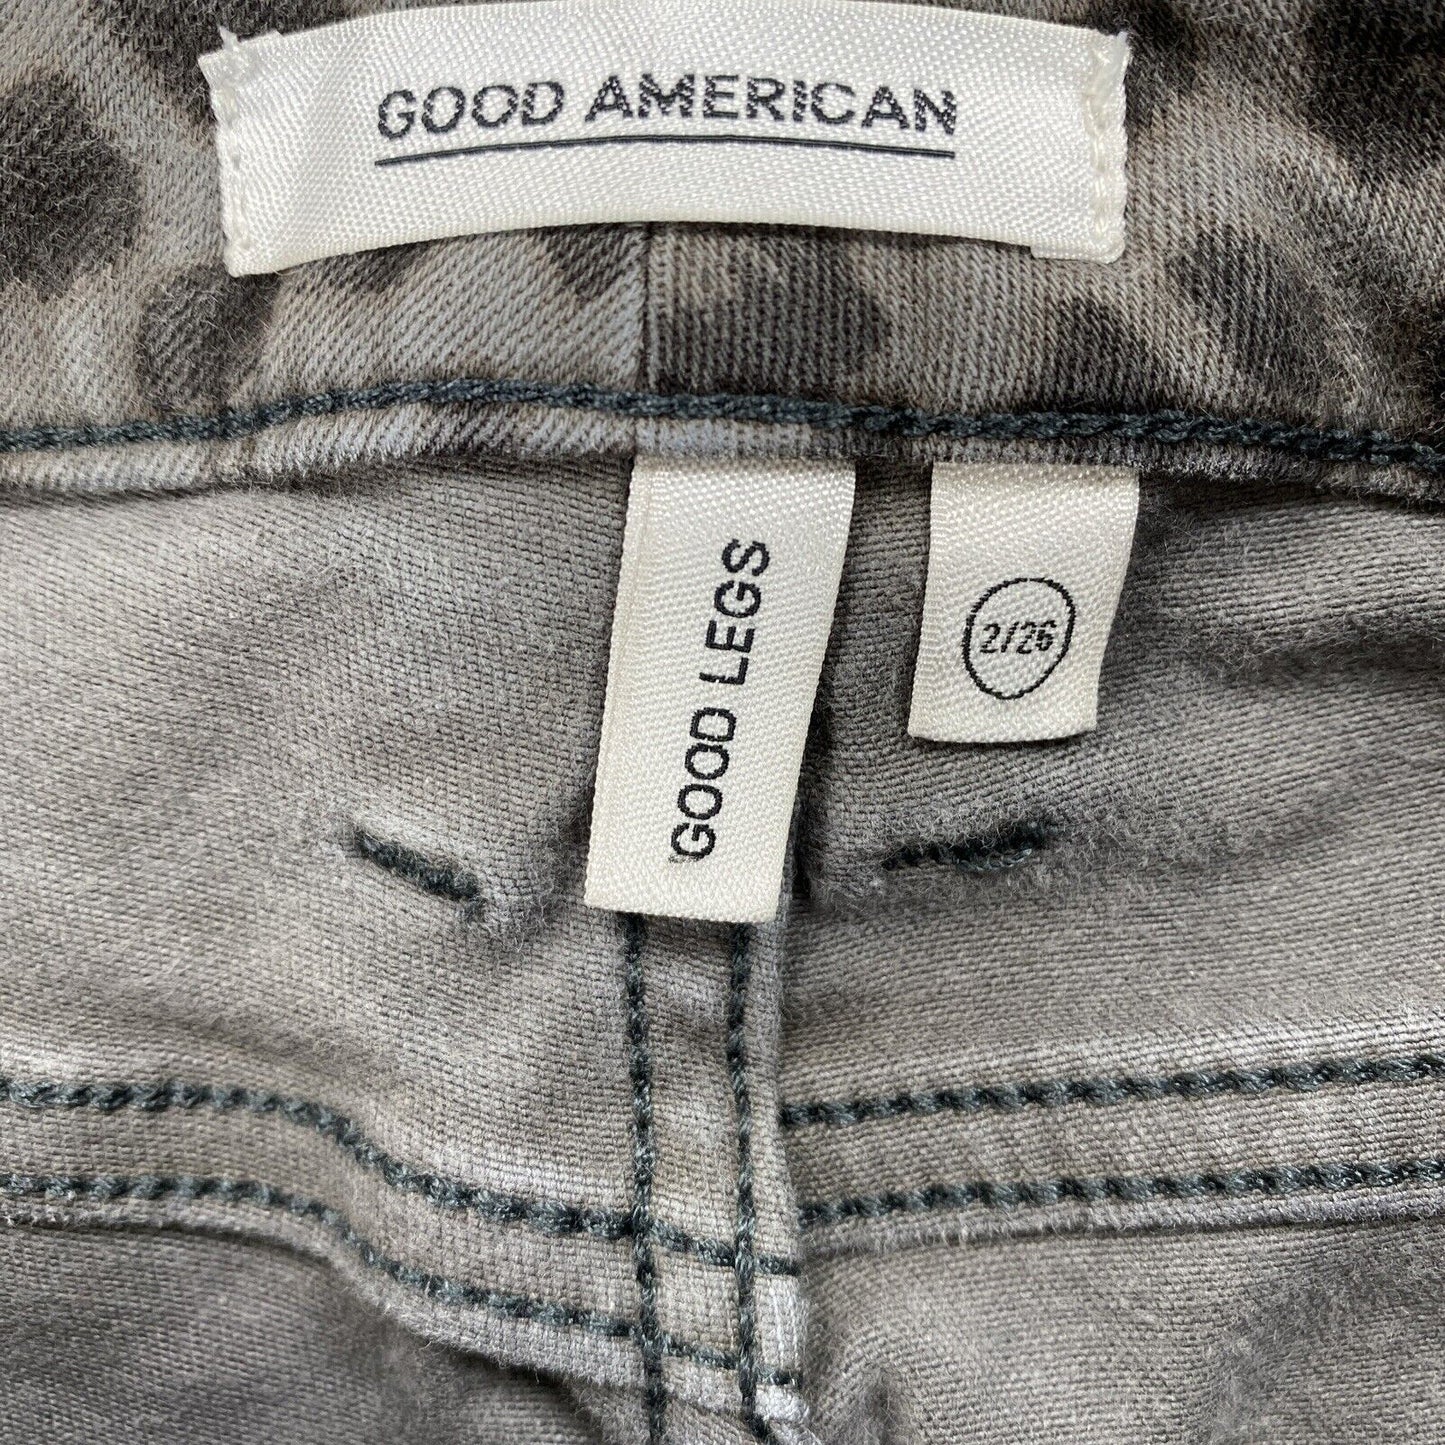 Good American Women's Gray Leopard Print Stretch Skinny Jeans - 2/26